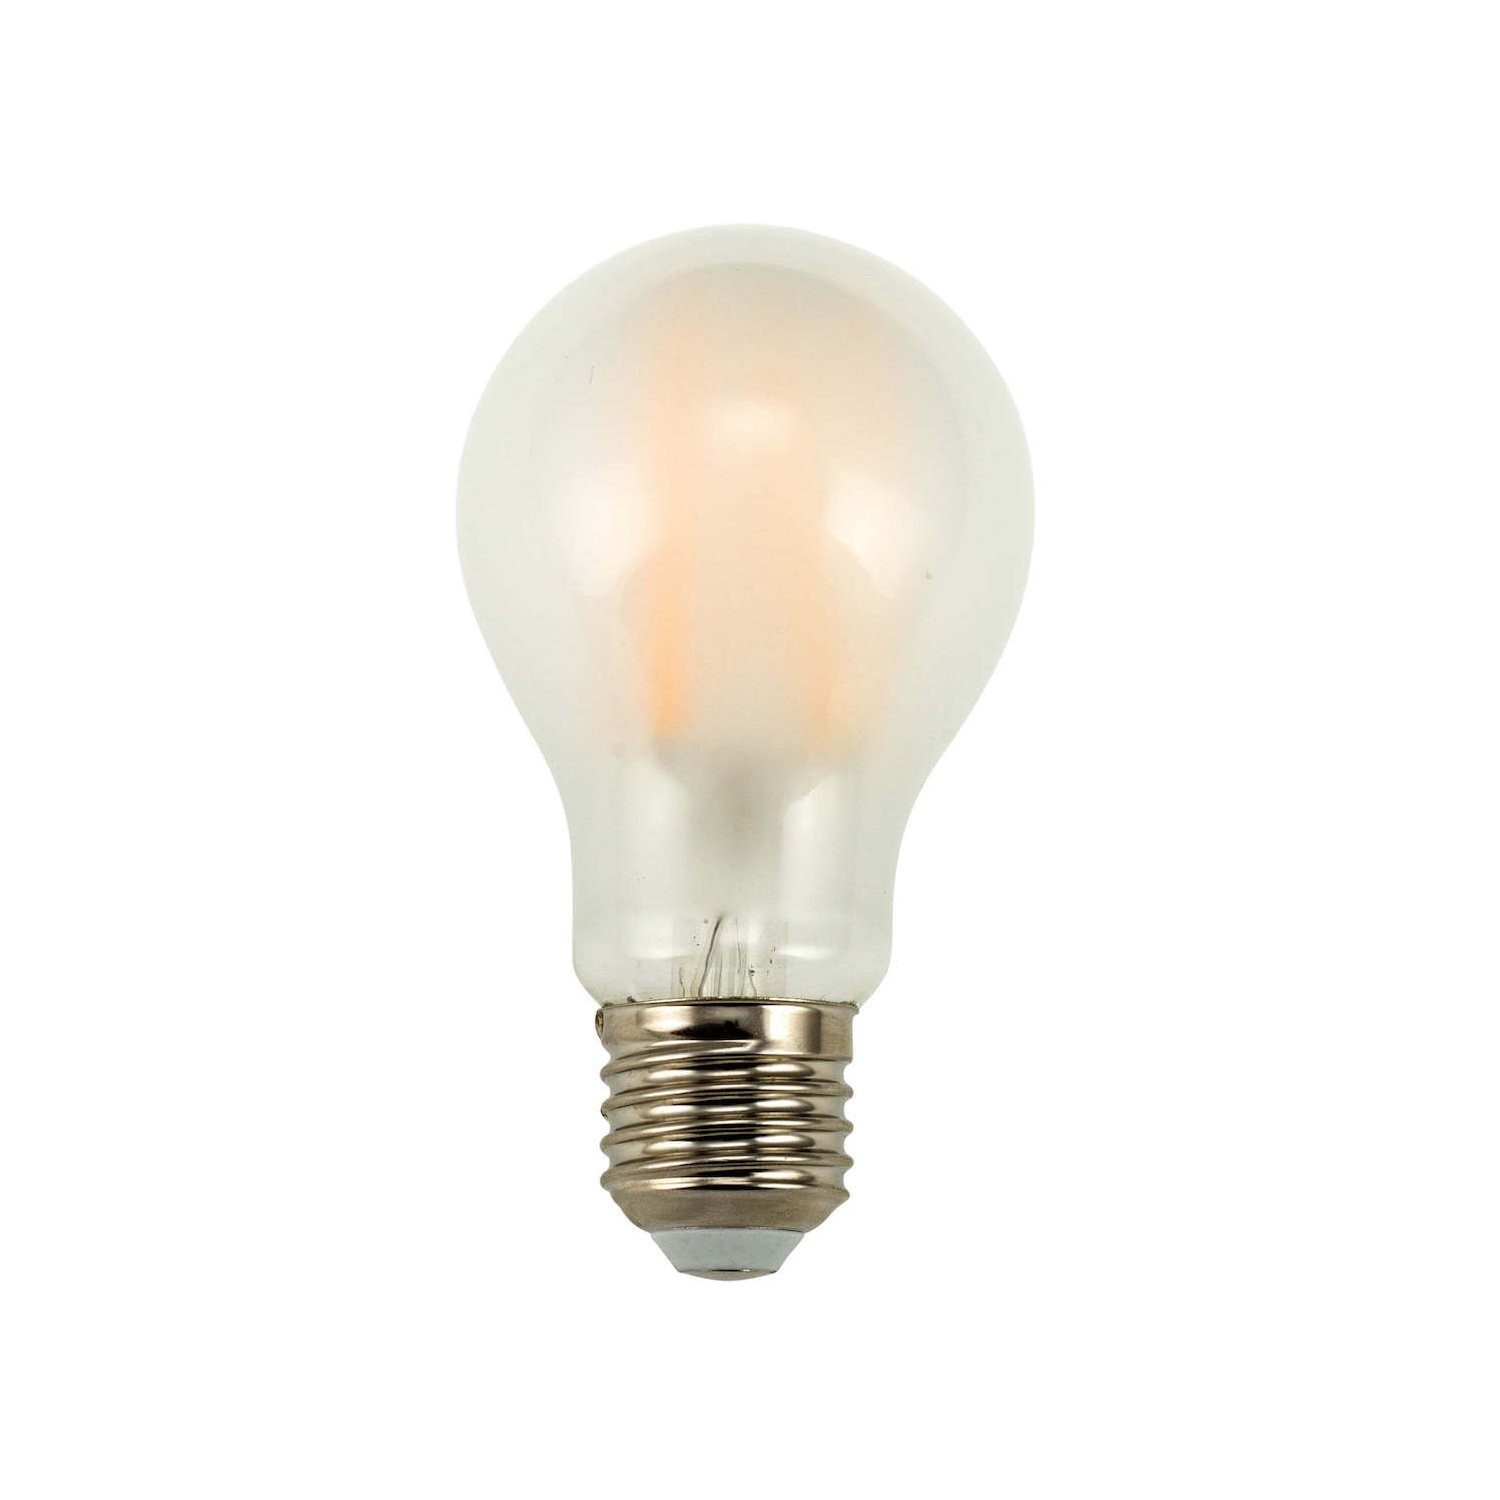 mokebo »Der Globus« LED-Leuchtmittel, E27, Warmweiß, E27 LED-Lampe, LED  Leuchtmittel oder LED-Birne in Warmweiß o. getönt